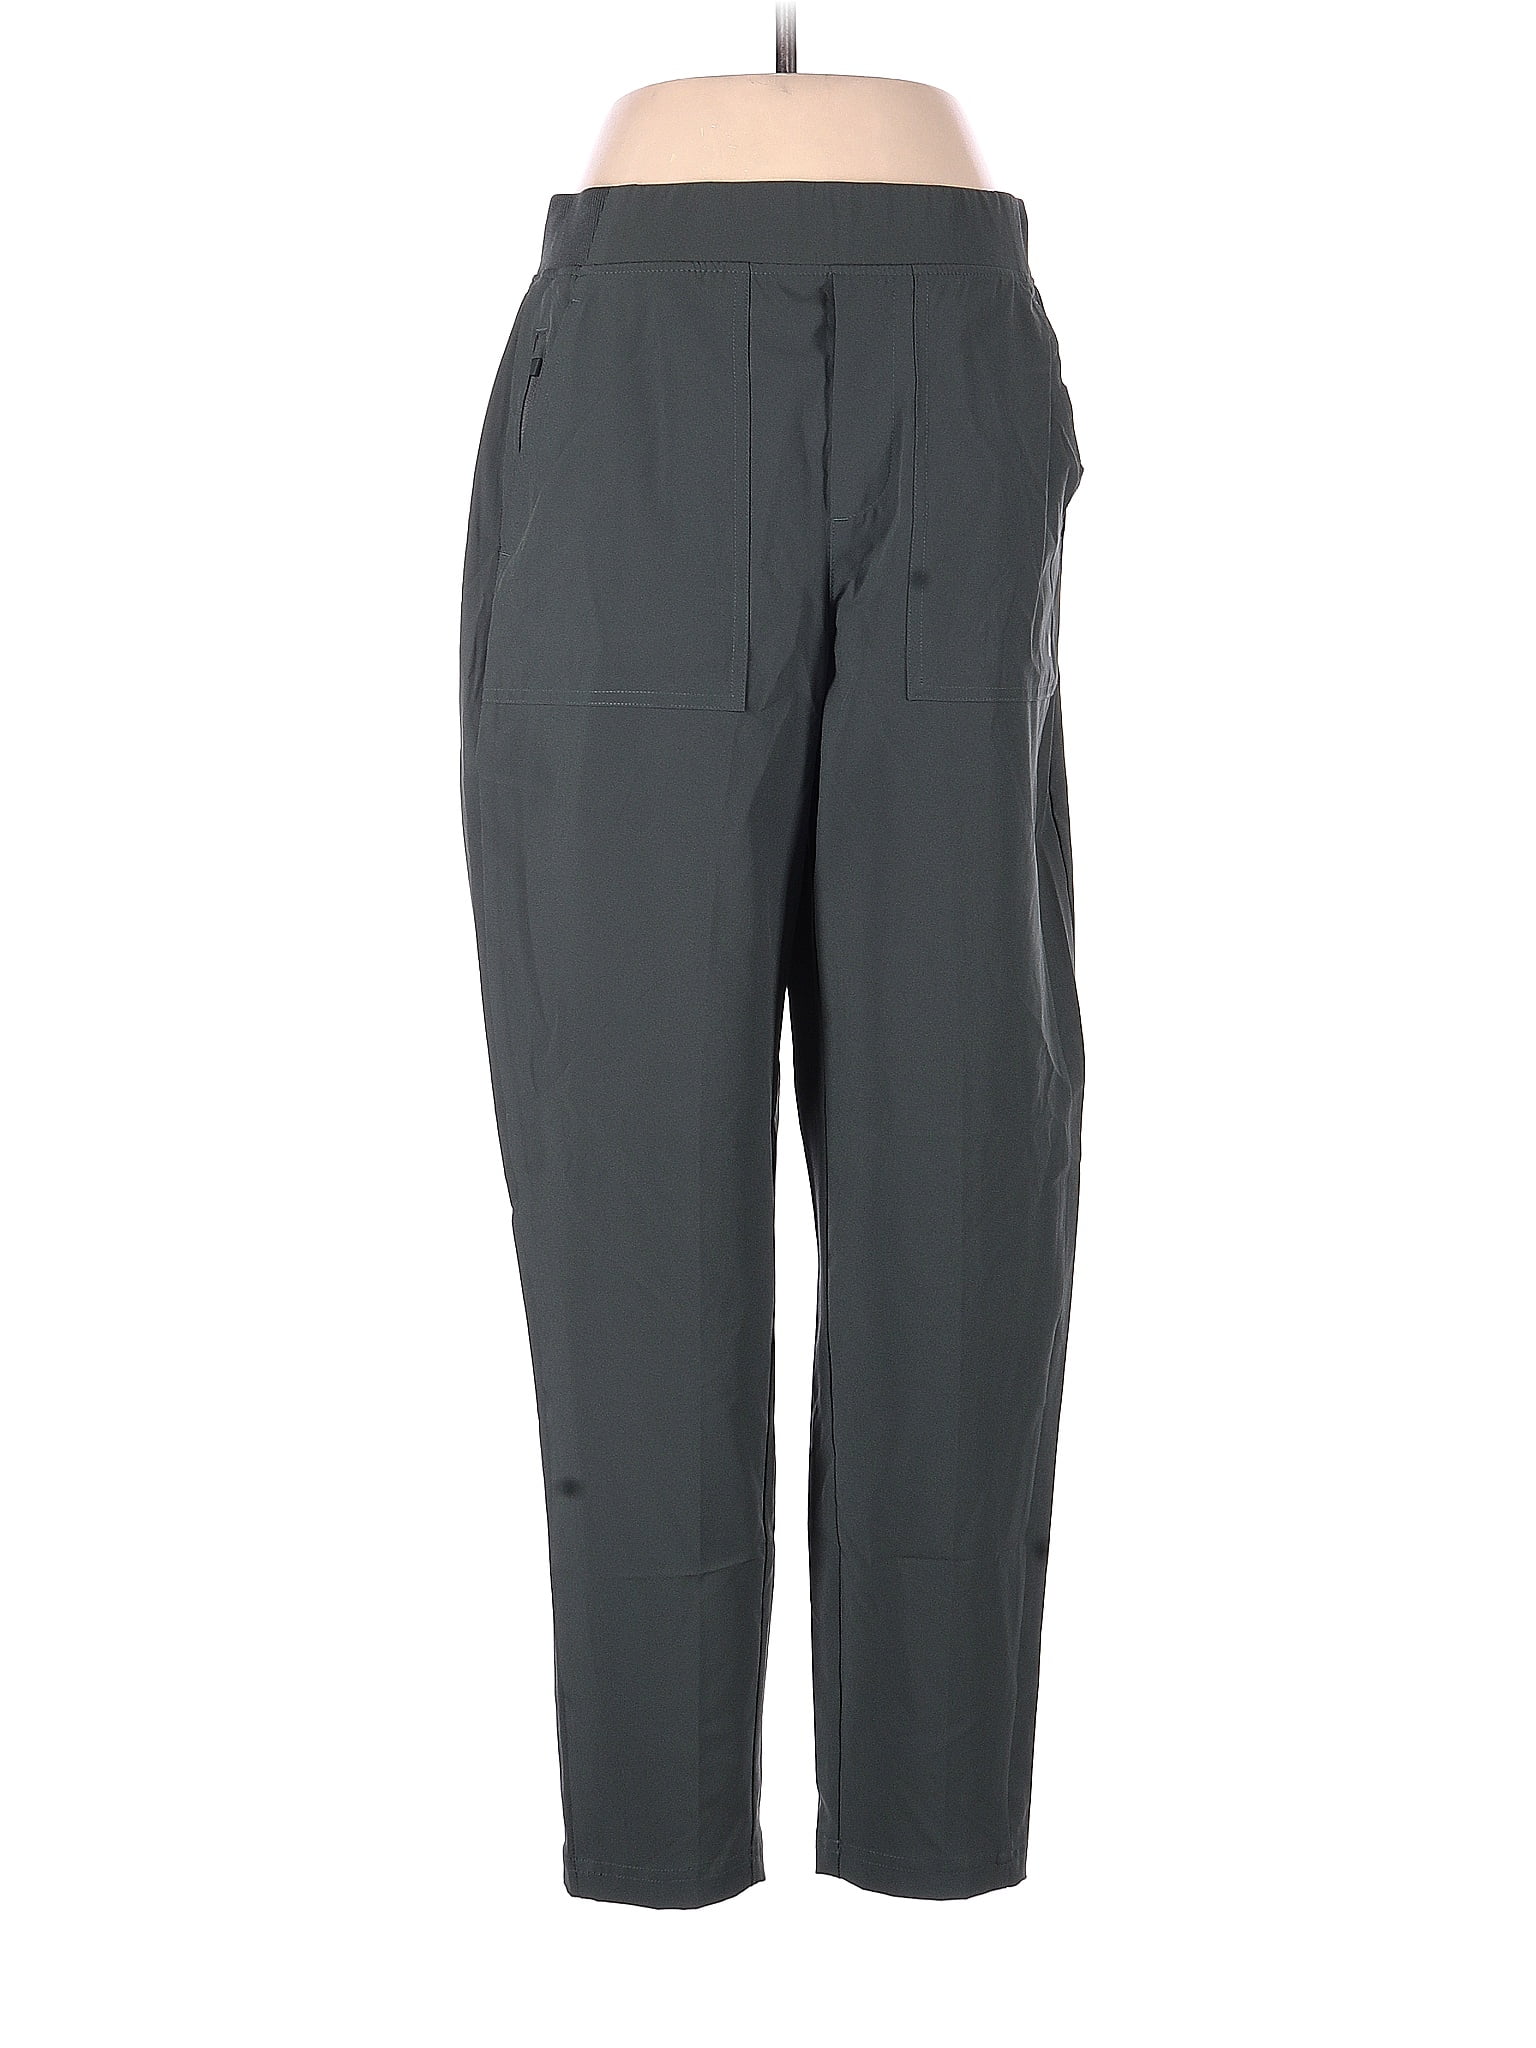 Apana Gray Active Pants Size M - 58% off